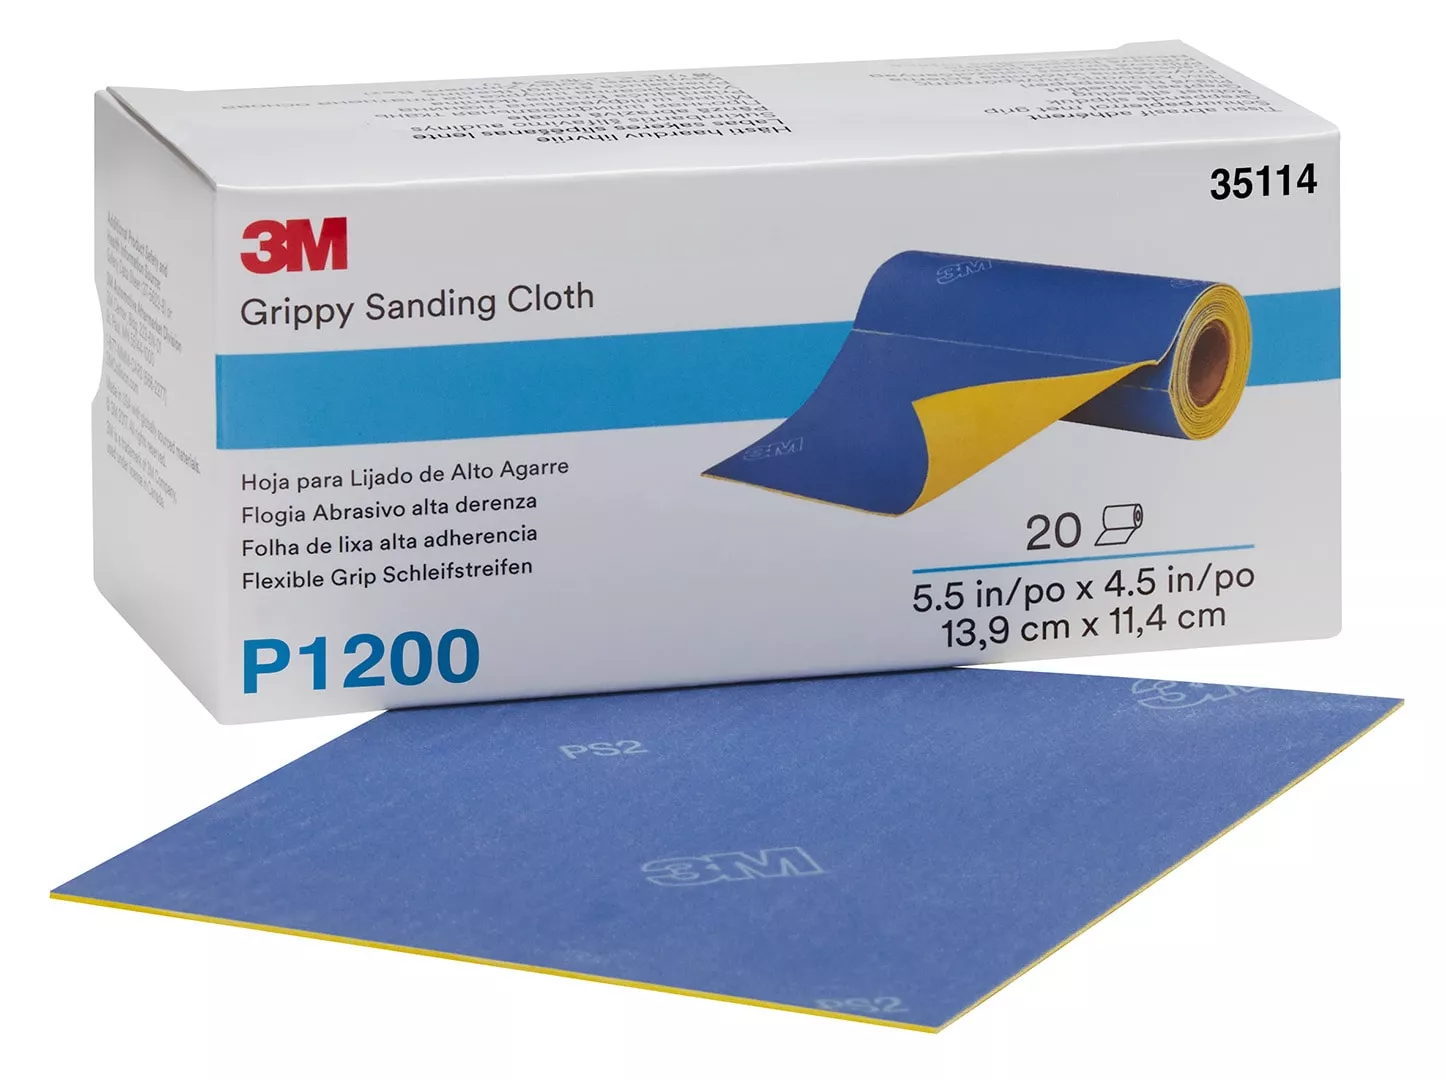 SKU 7100142936 | 3M™ Grippy Sanding Cloth 35114